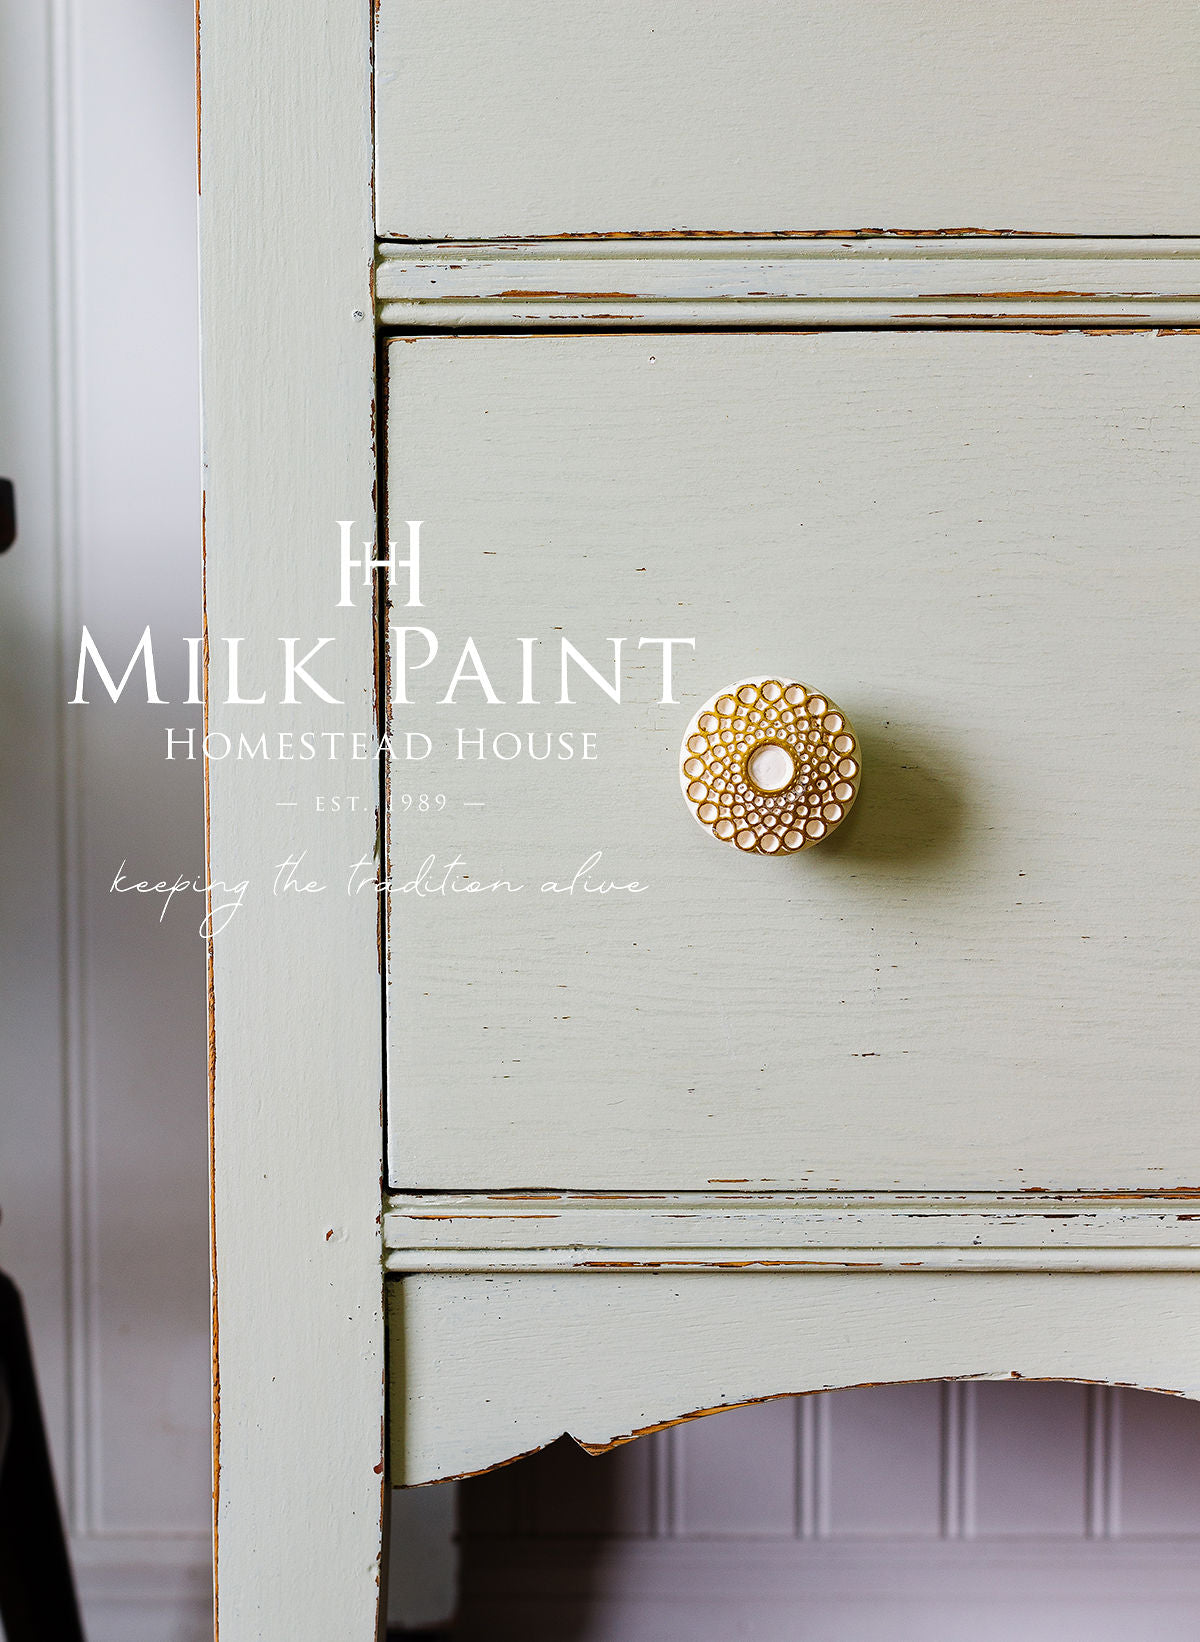 Milchfarbe | HH Milk Paint - Potpourri